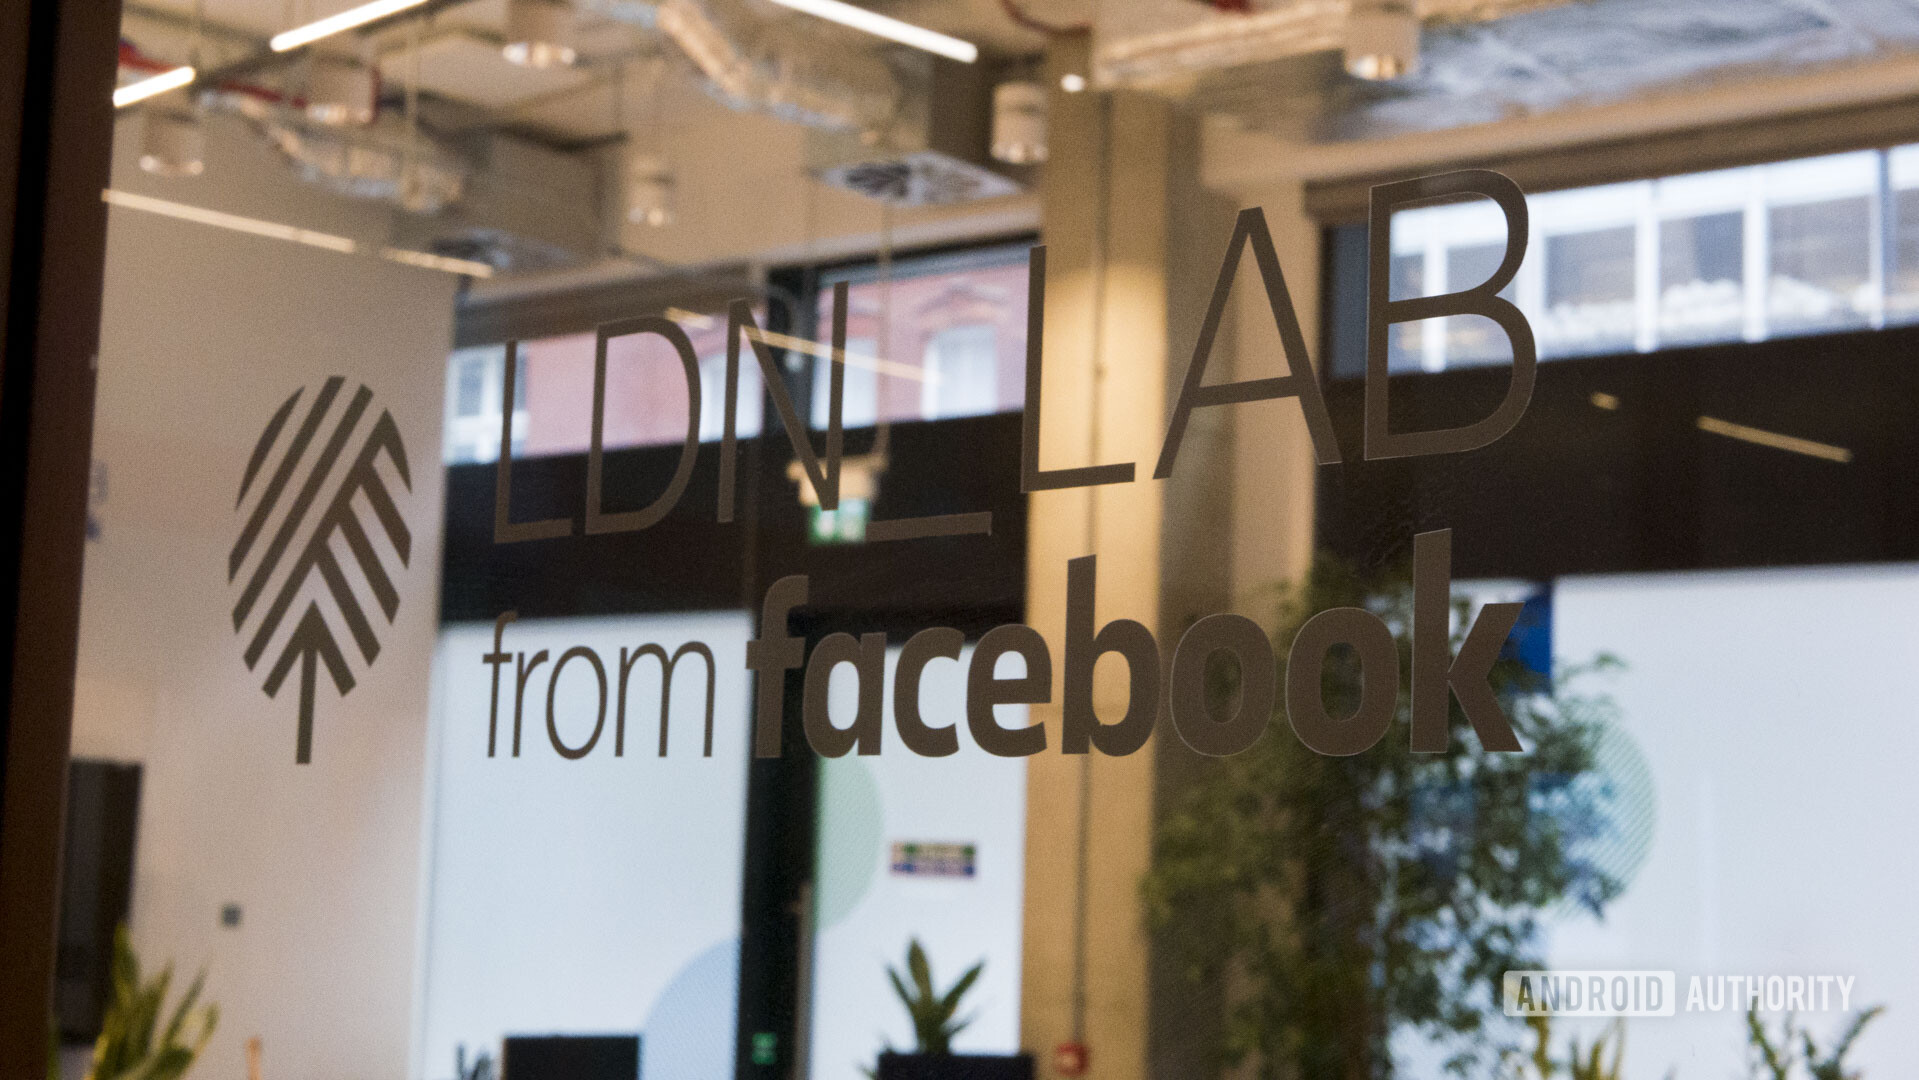 Facebook Office London LDN_LAB Incubator for Startups